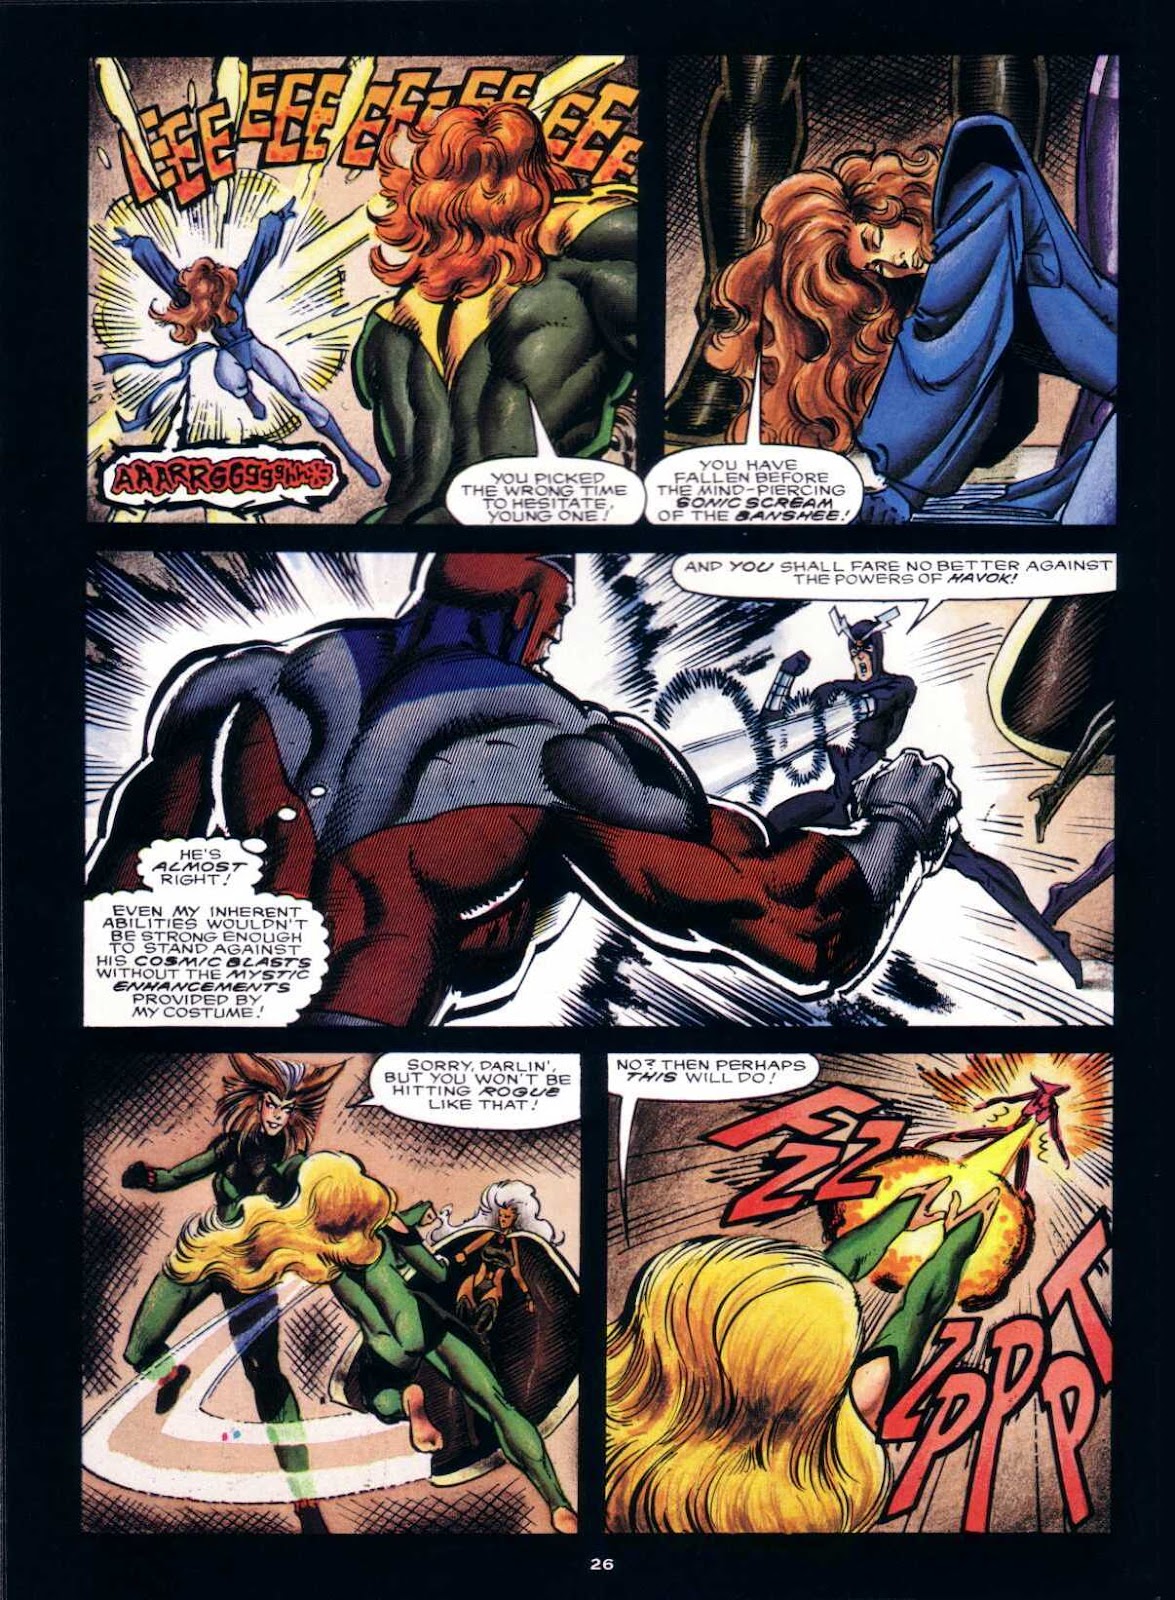 Marvel Graphic Novel issue 66 - Excalibur - Weird War III - Page 25